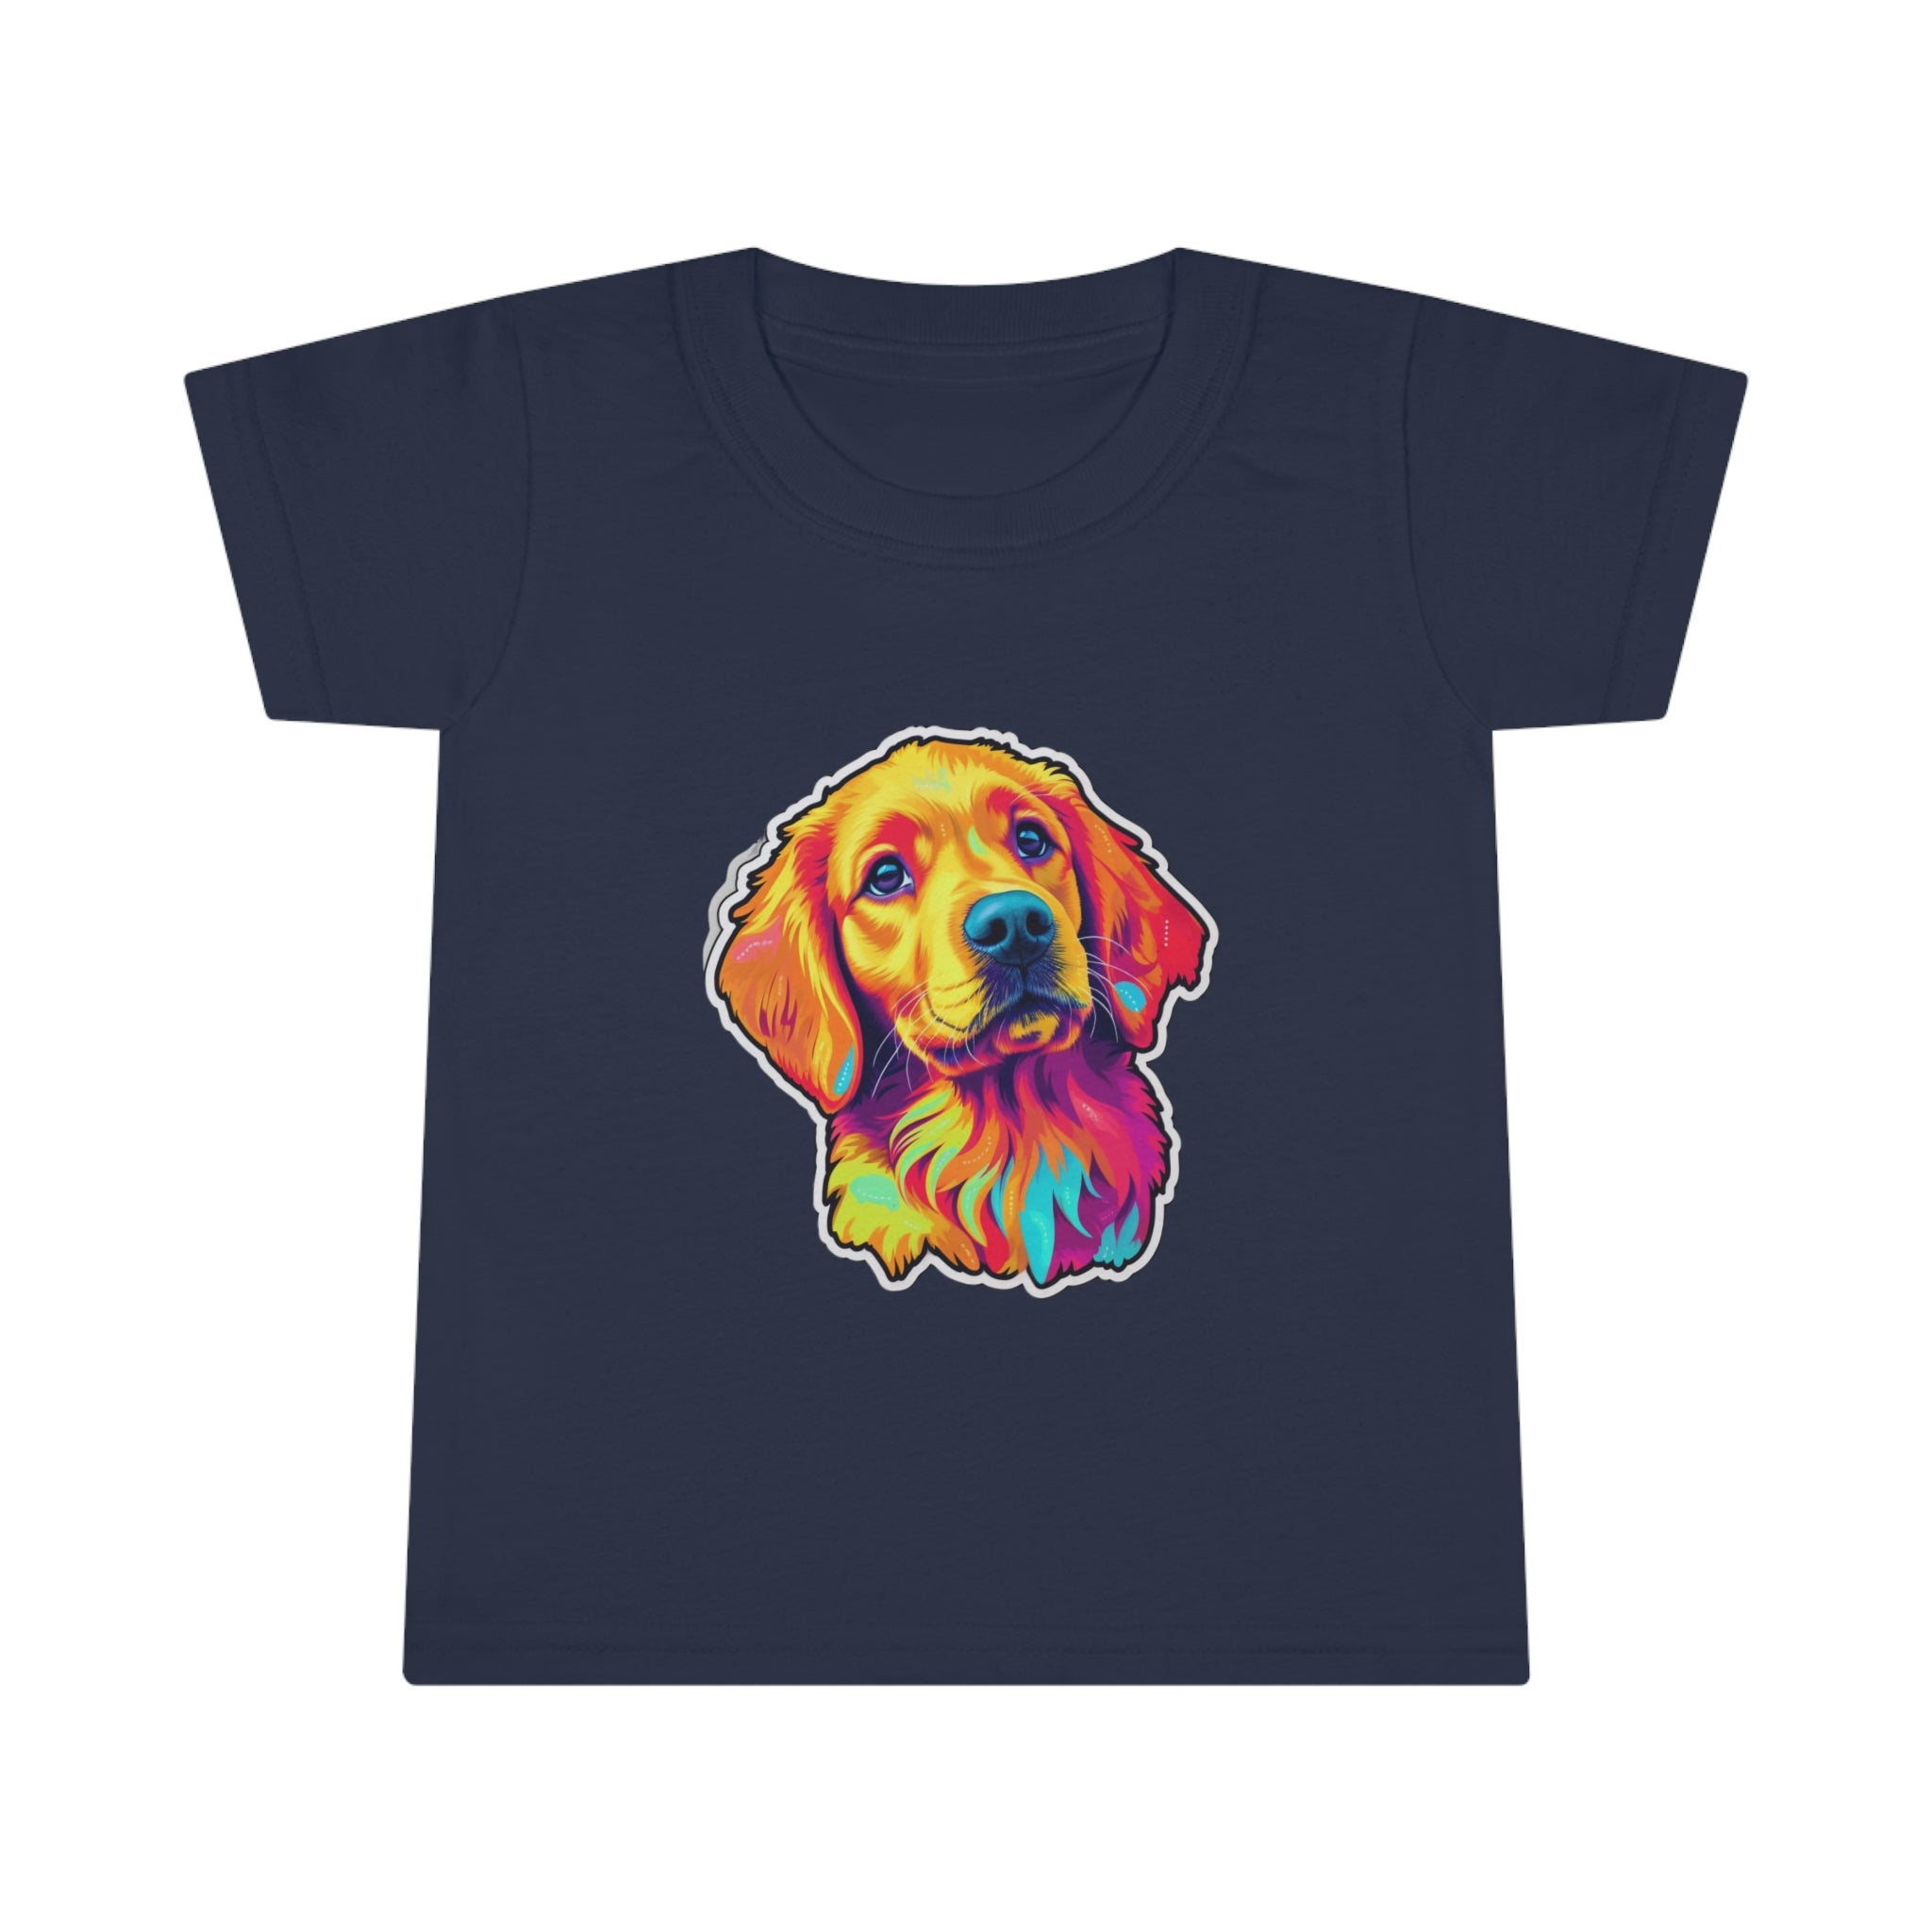 Toddler T-shirt - Puppies 10